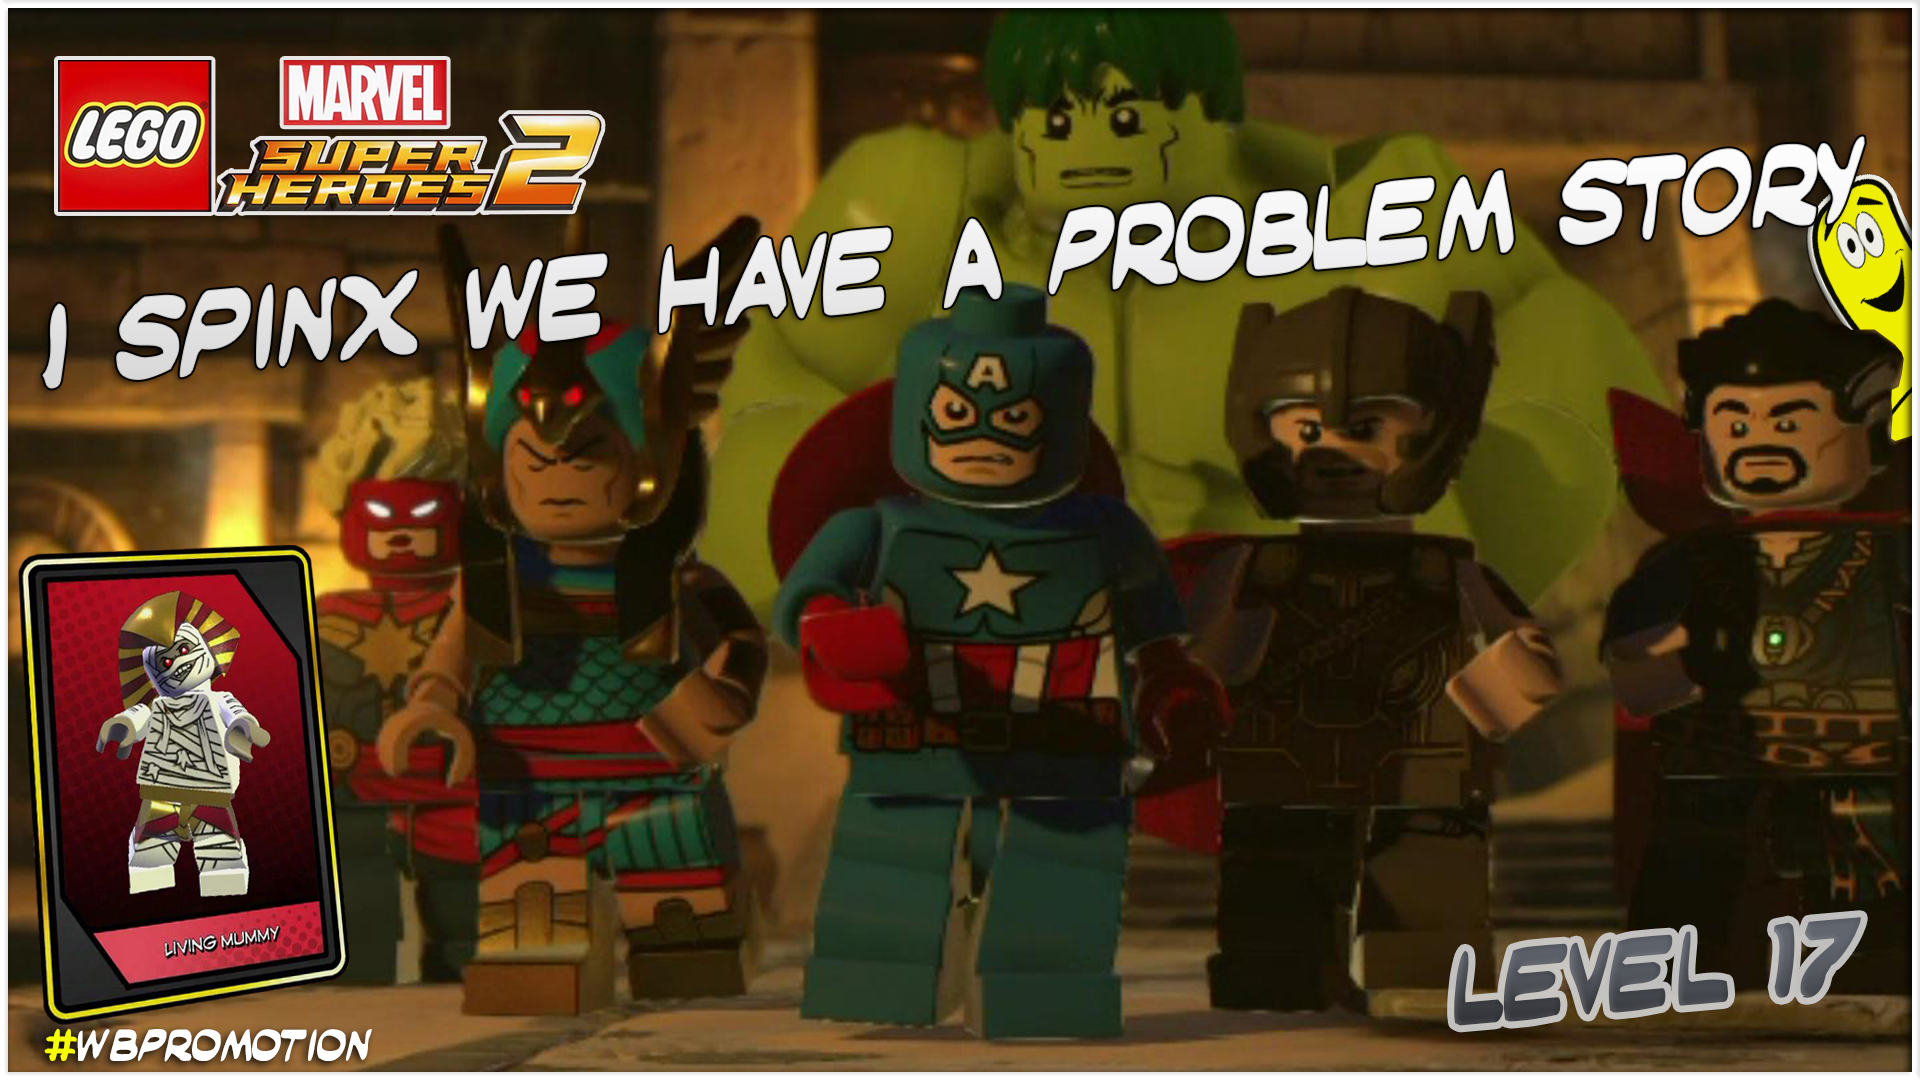 Lego Marvel Superheroes 2: Level 17 / I Spinx We Have A Problem STORY – HTG